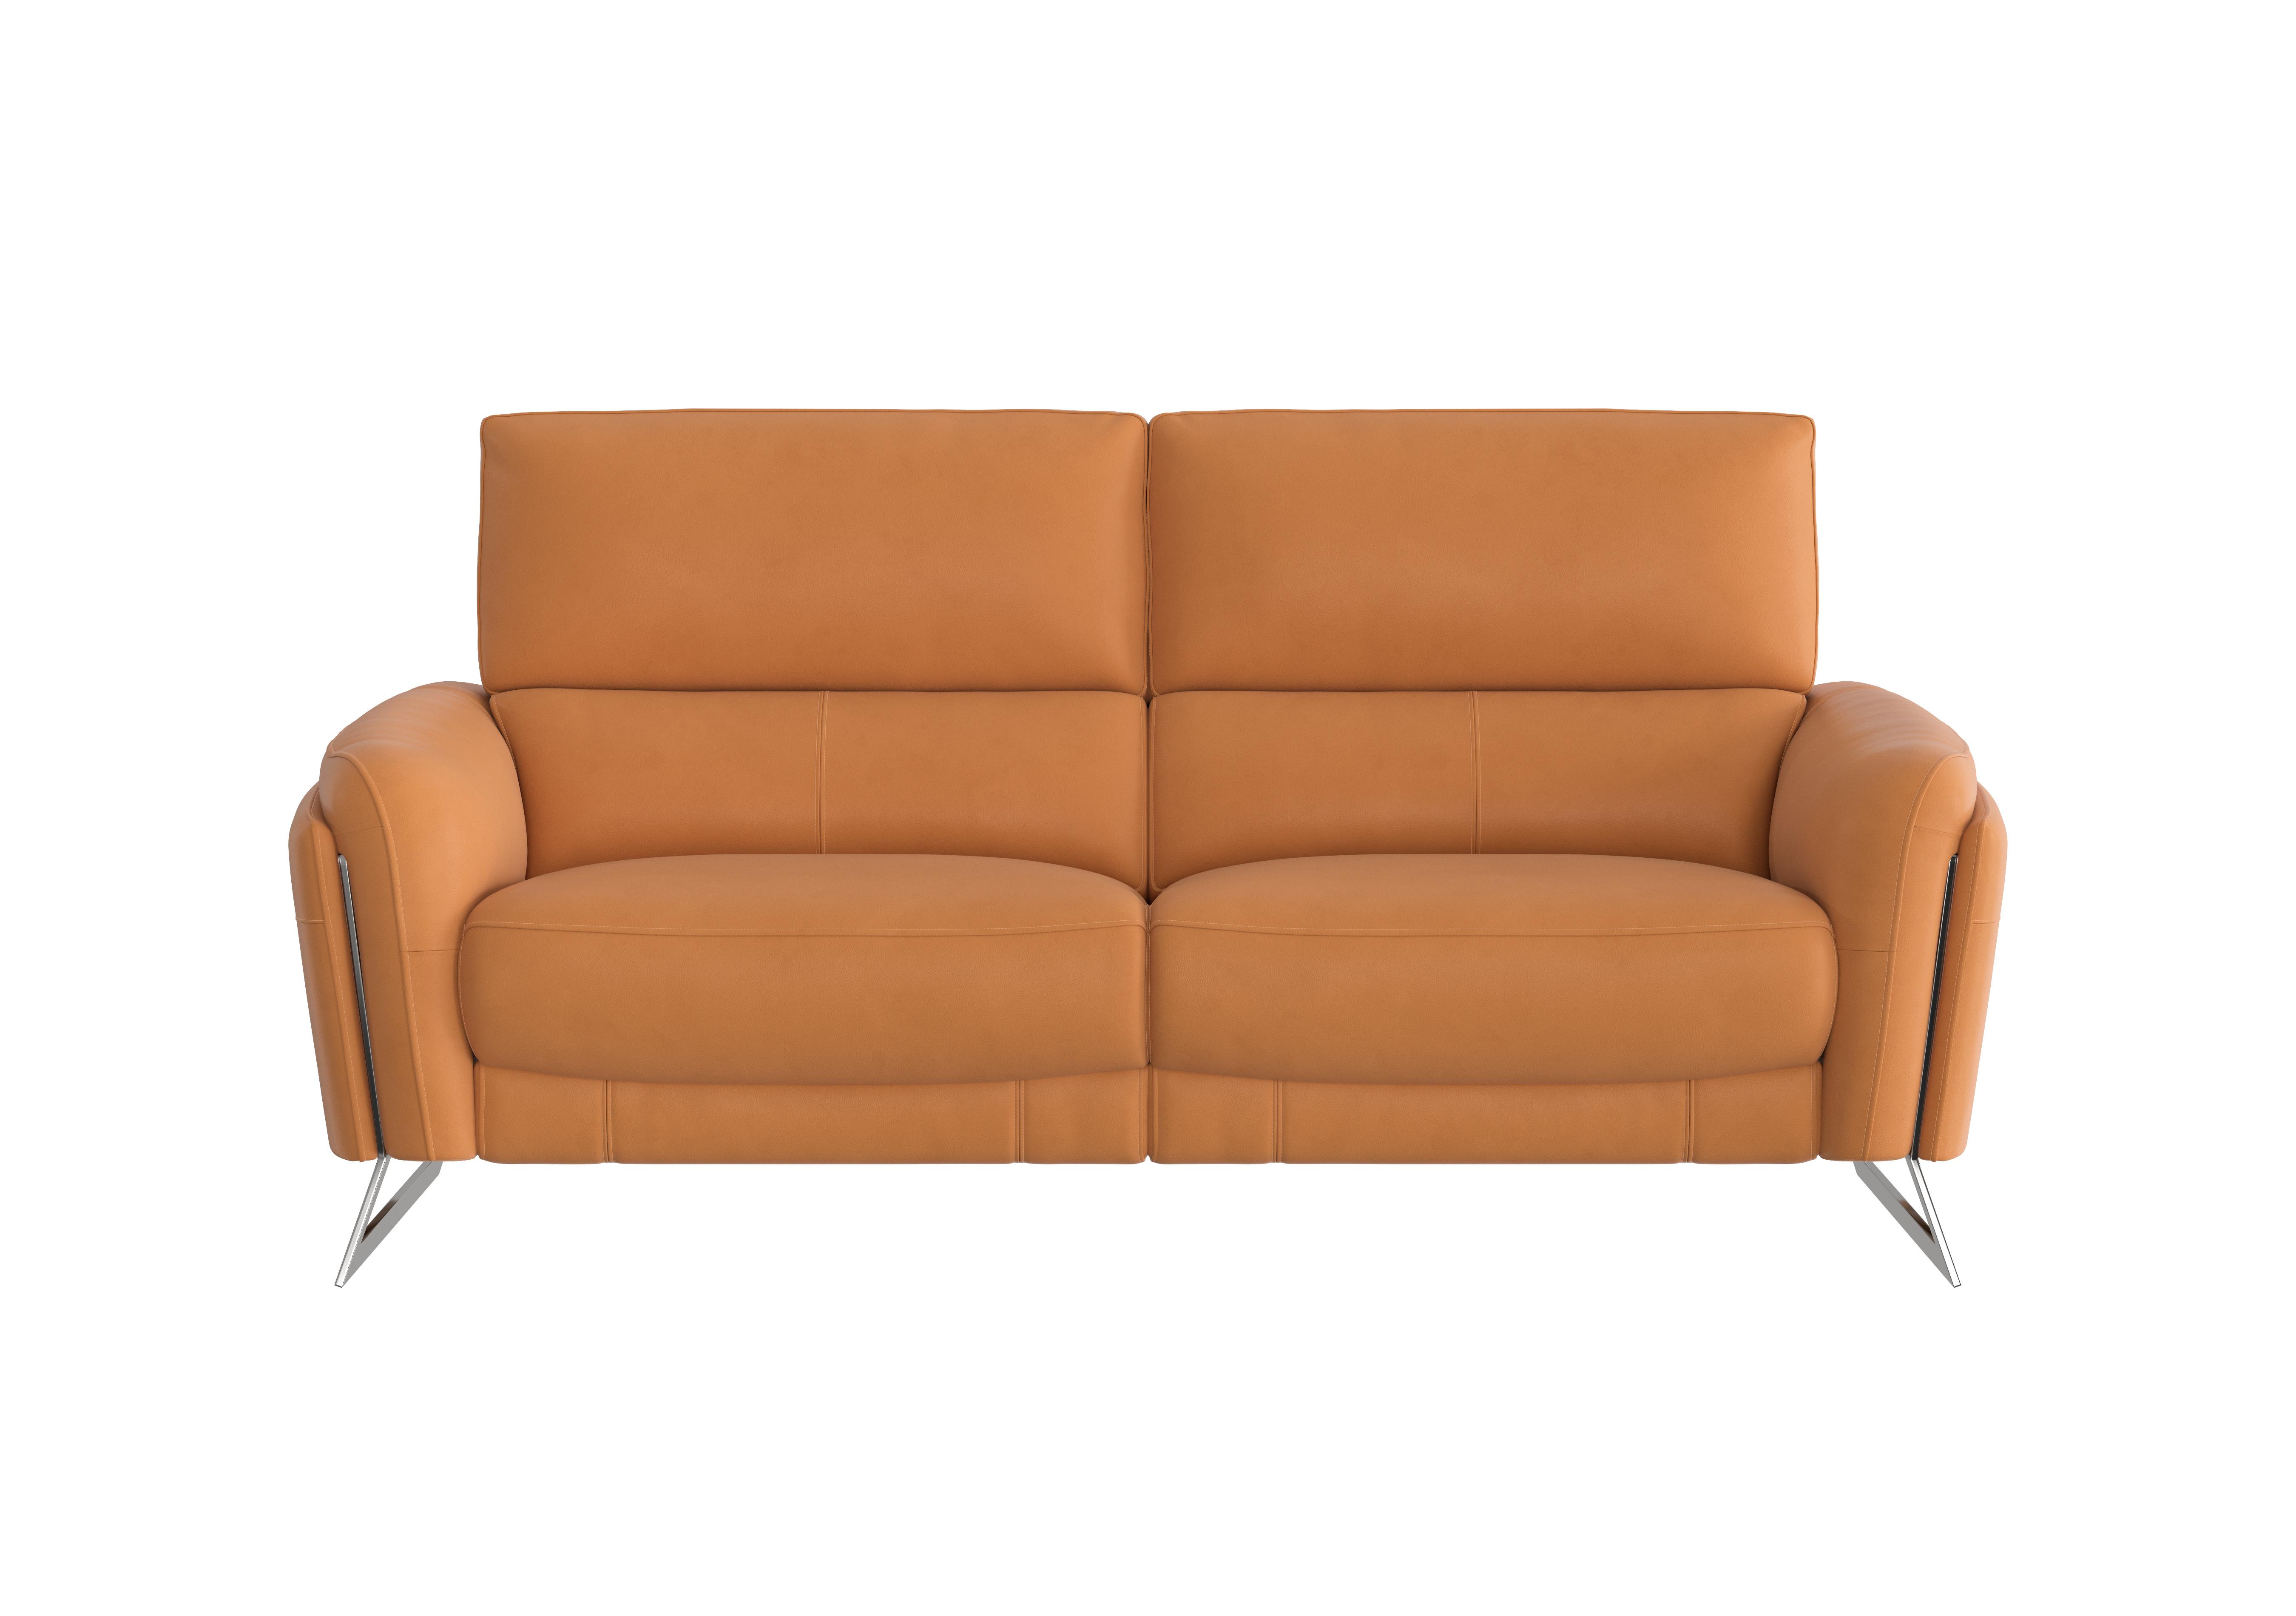 Amarilla 3 Seater Leather Sofa in Bv-335e Honey Yellow on Furniture Village